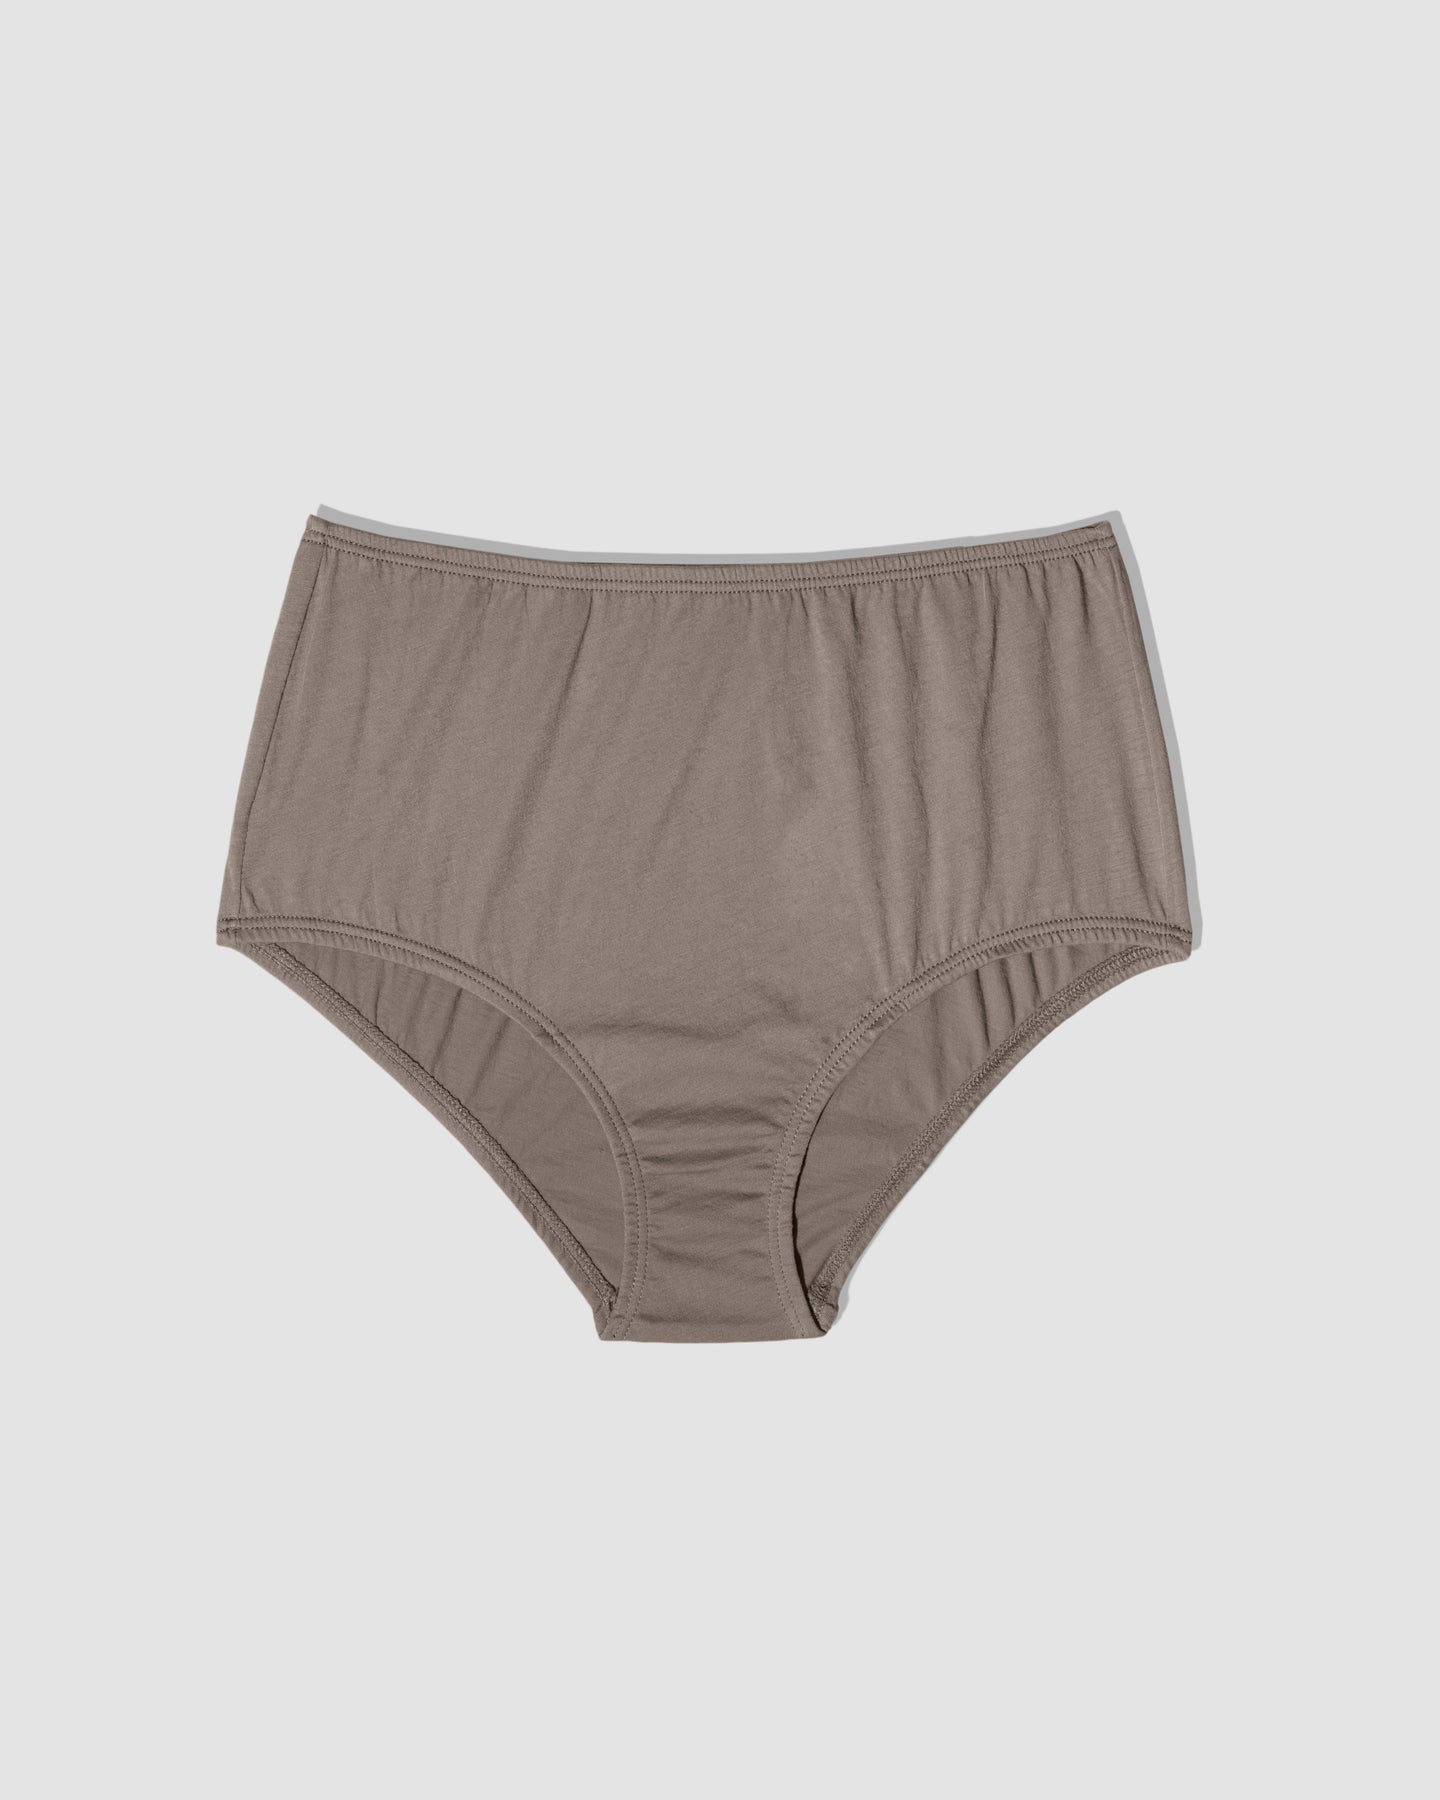 high waisted - 100% organic cotton mid-rise underwear, oddobody